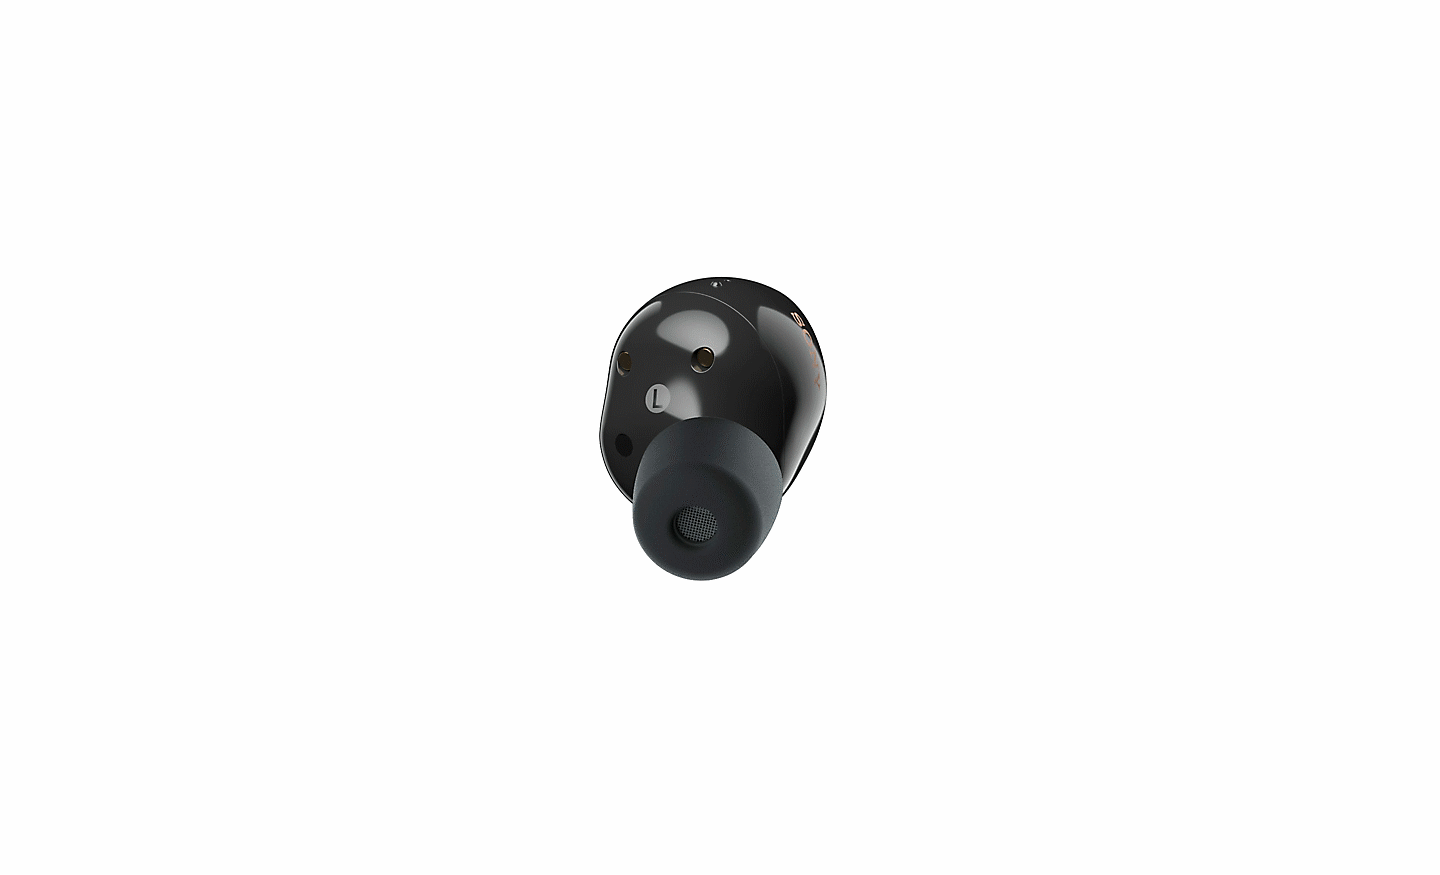 Prikaz slušalica WF-1000XM5 od 360 stupnjeva